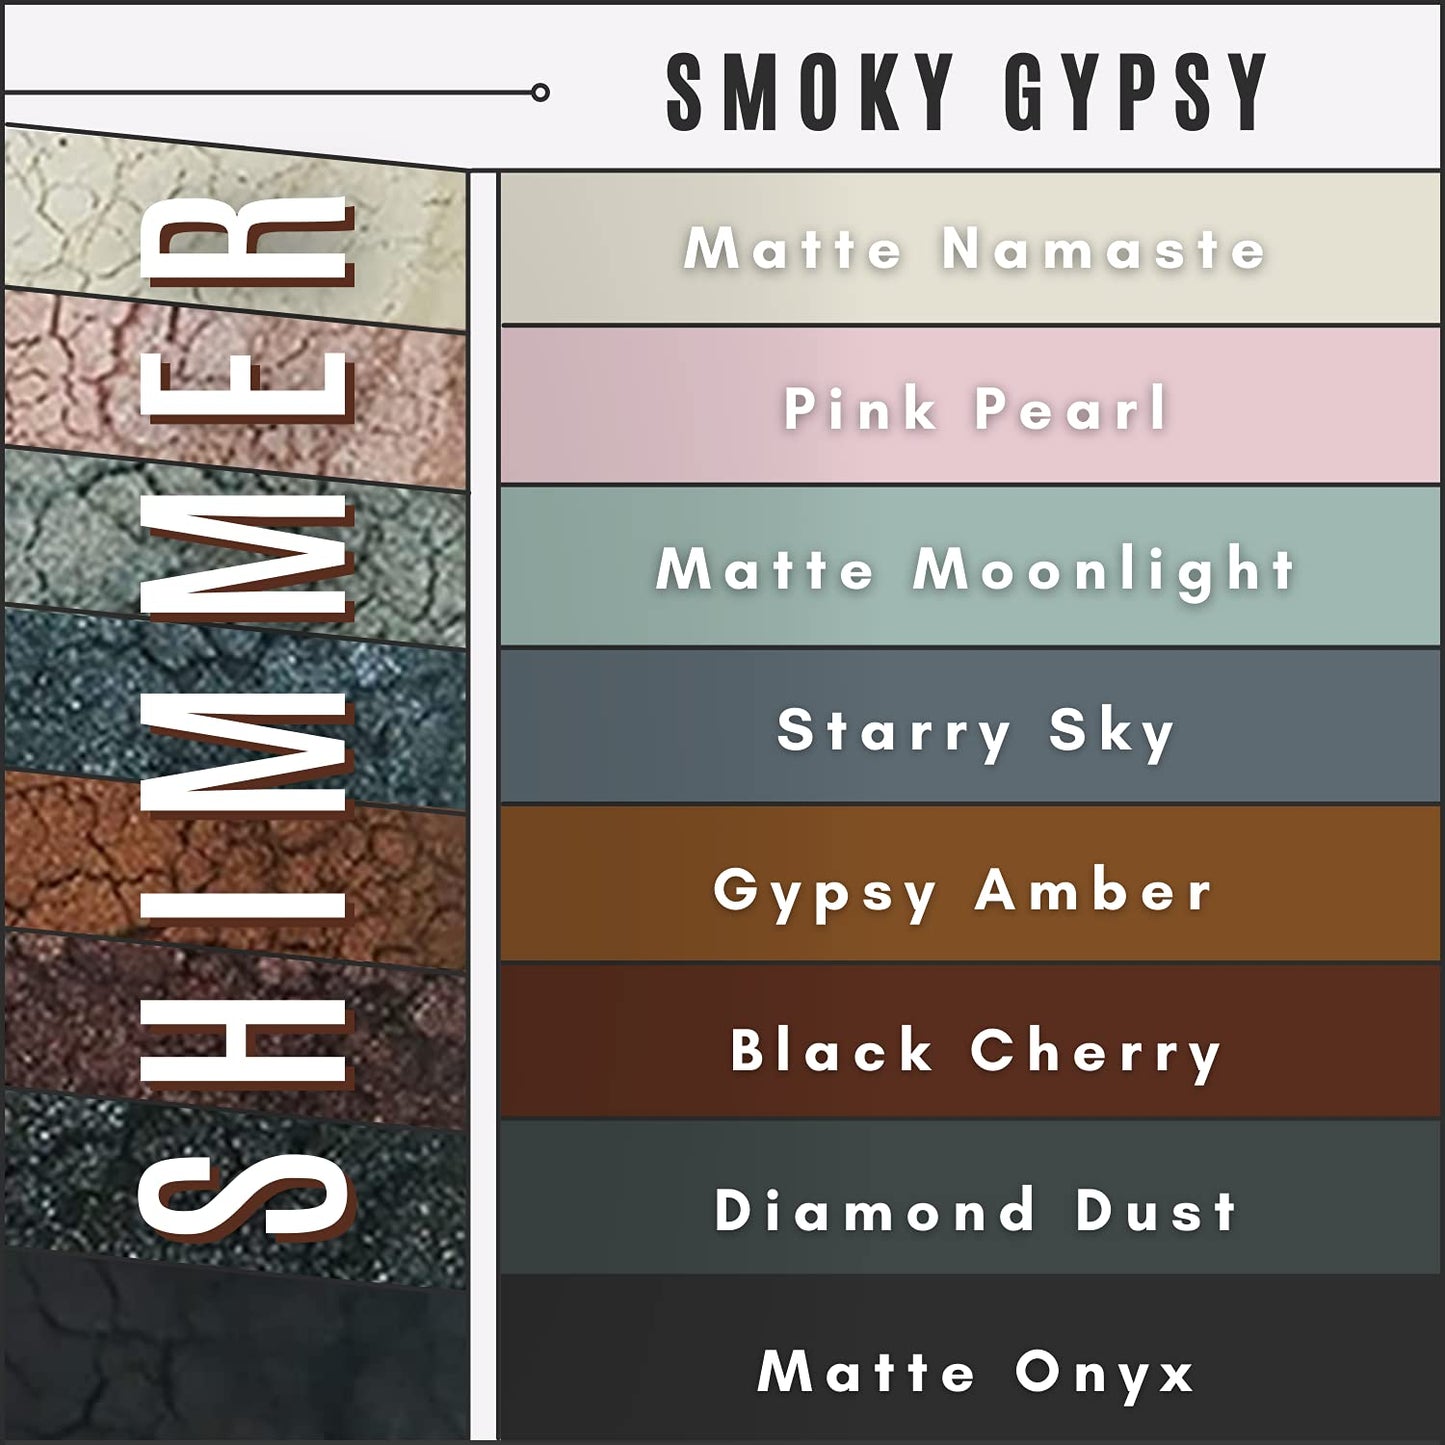 Smokey Gypsy